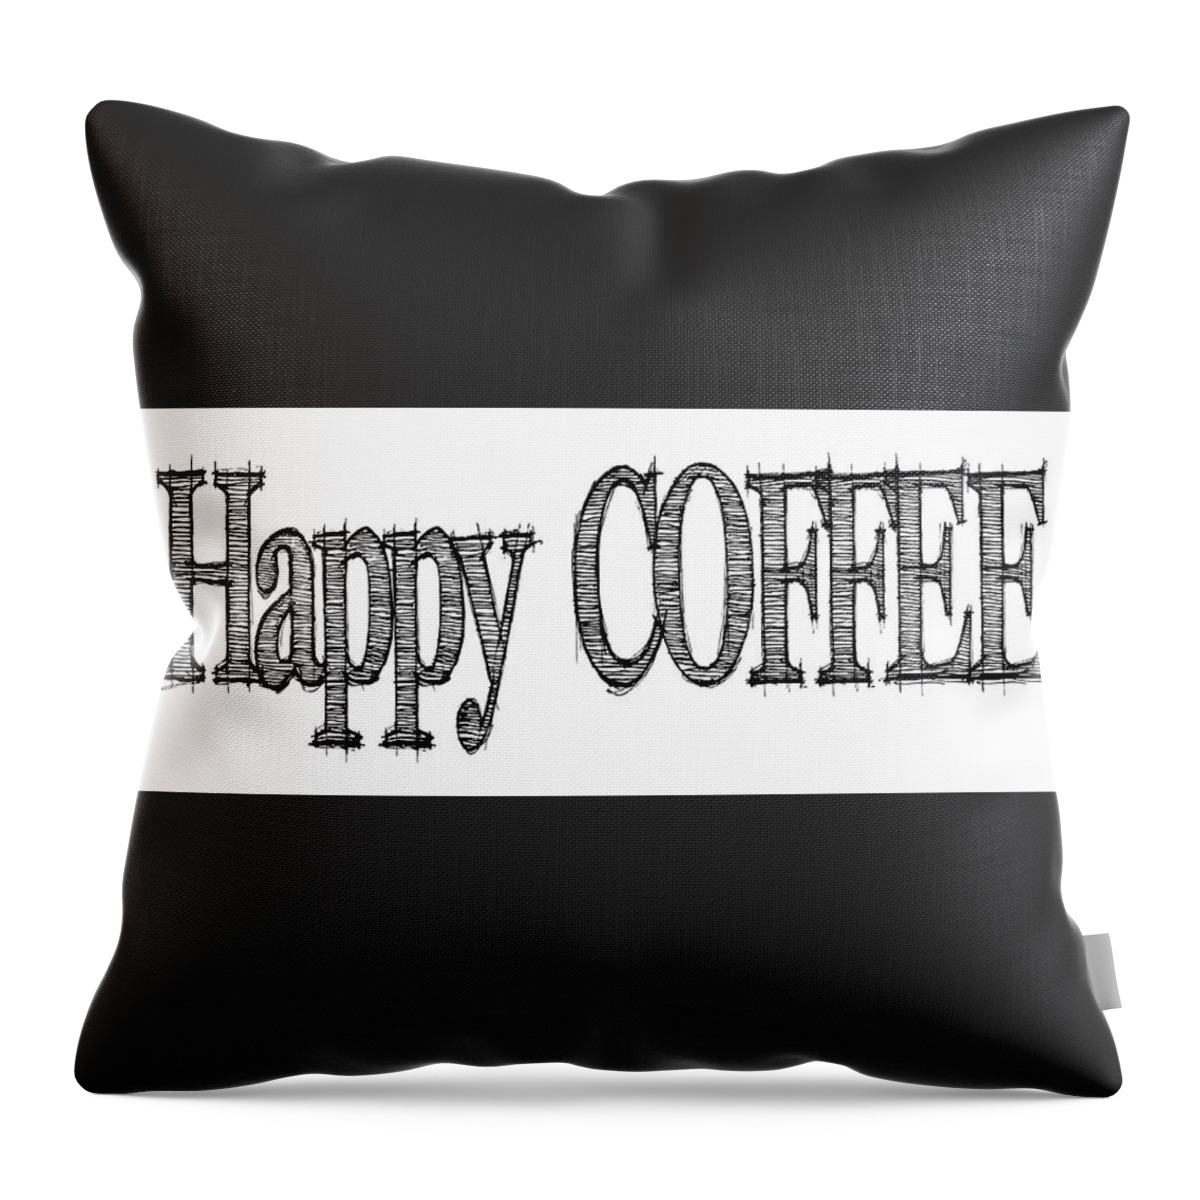  Throw Pillow featuring the digital art Happy COFFEE Mug by Robert J Sadler